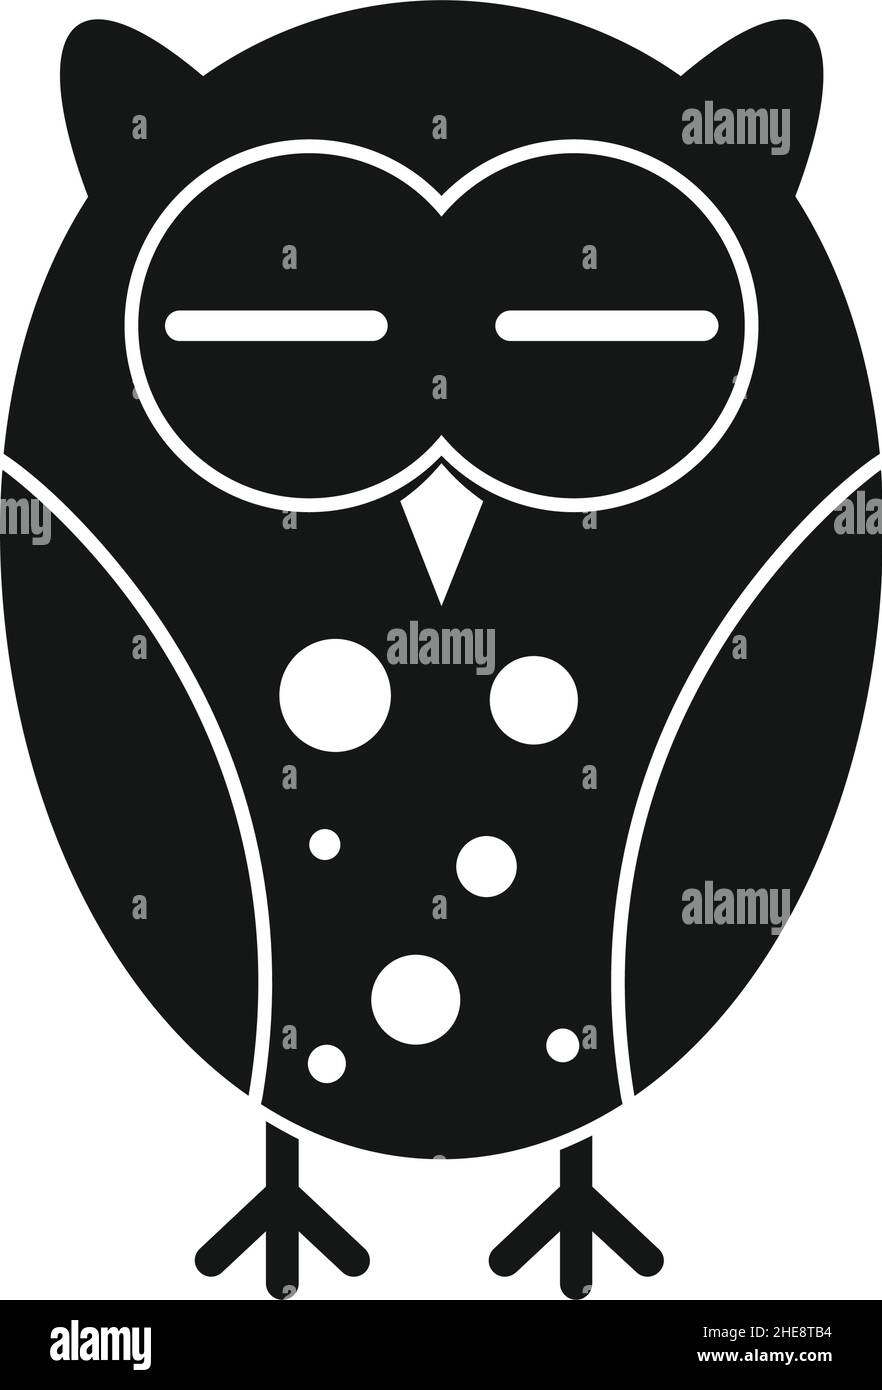 Sleeping owl black simple silhouette vector icon Stock Vector Image ...